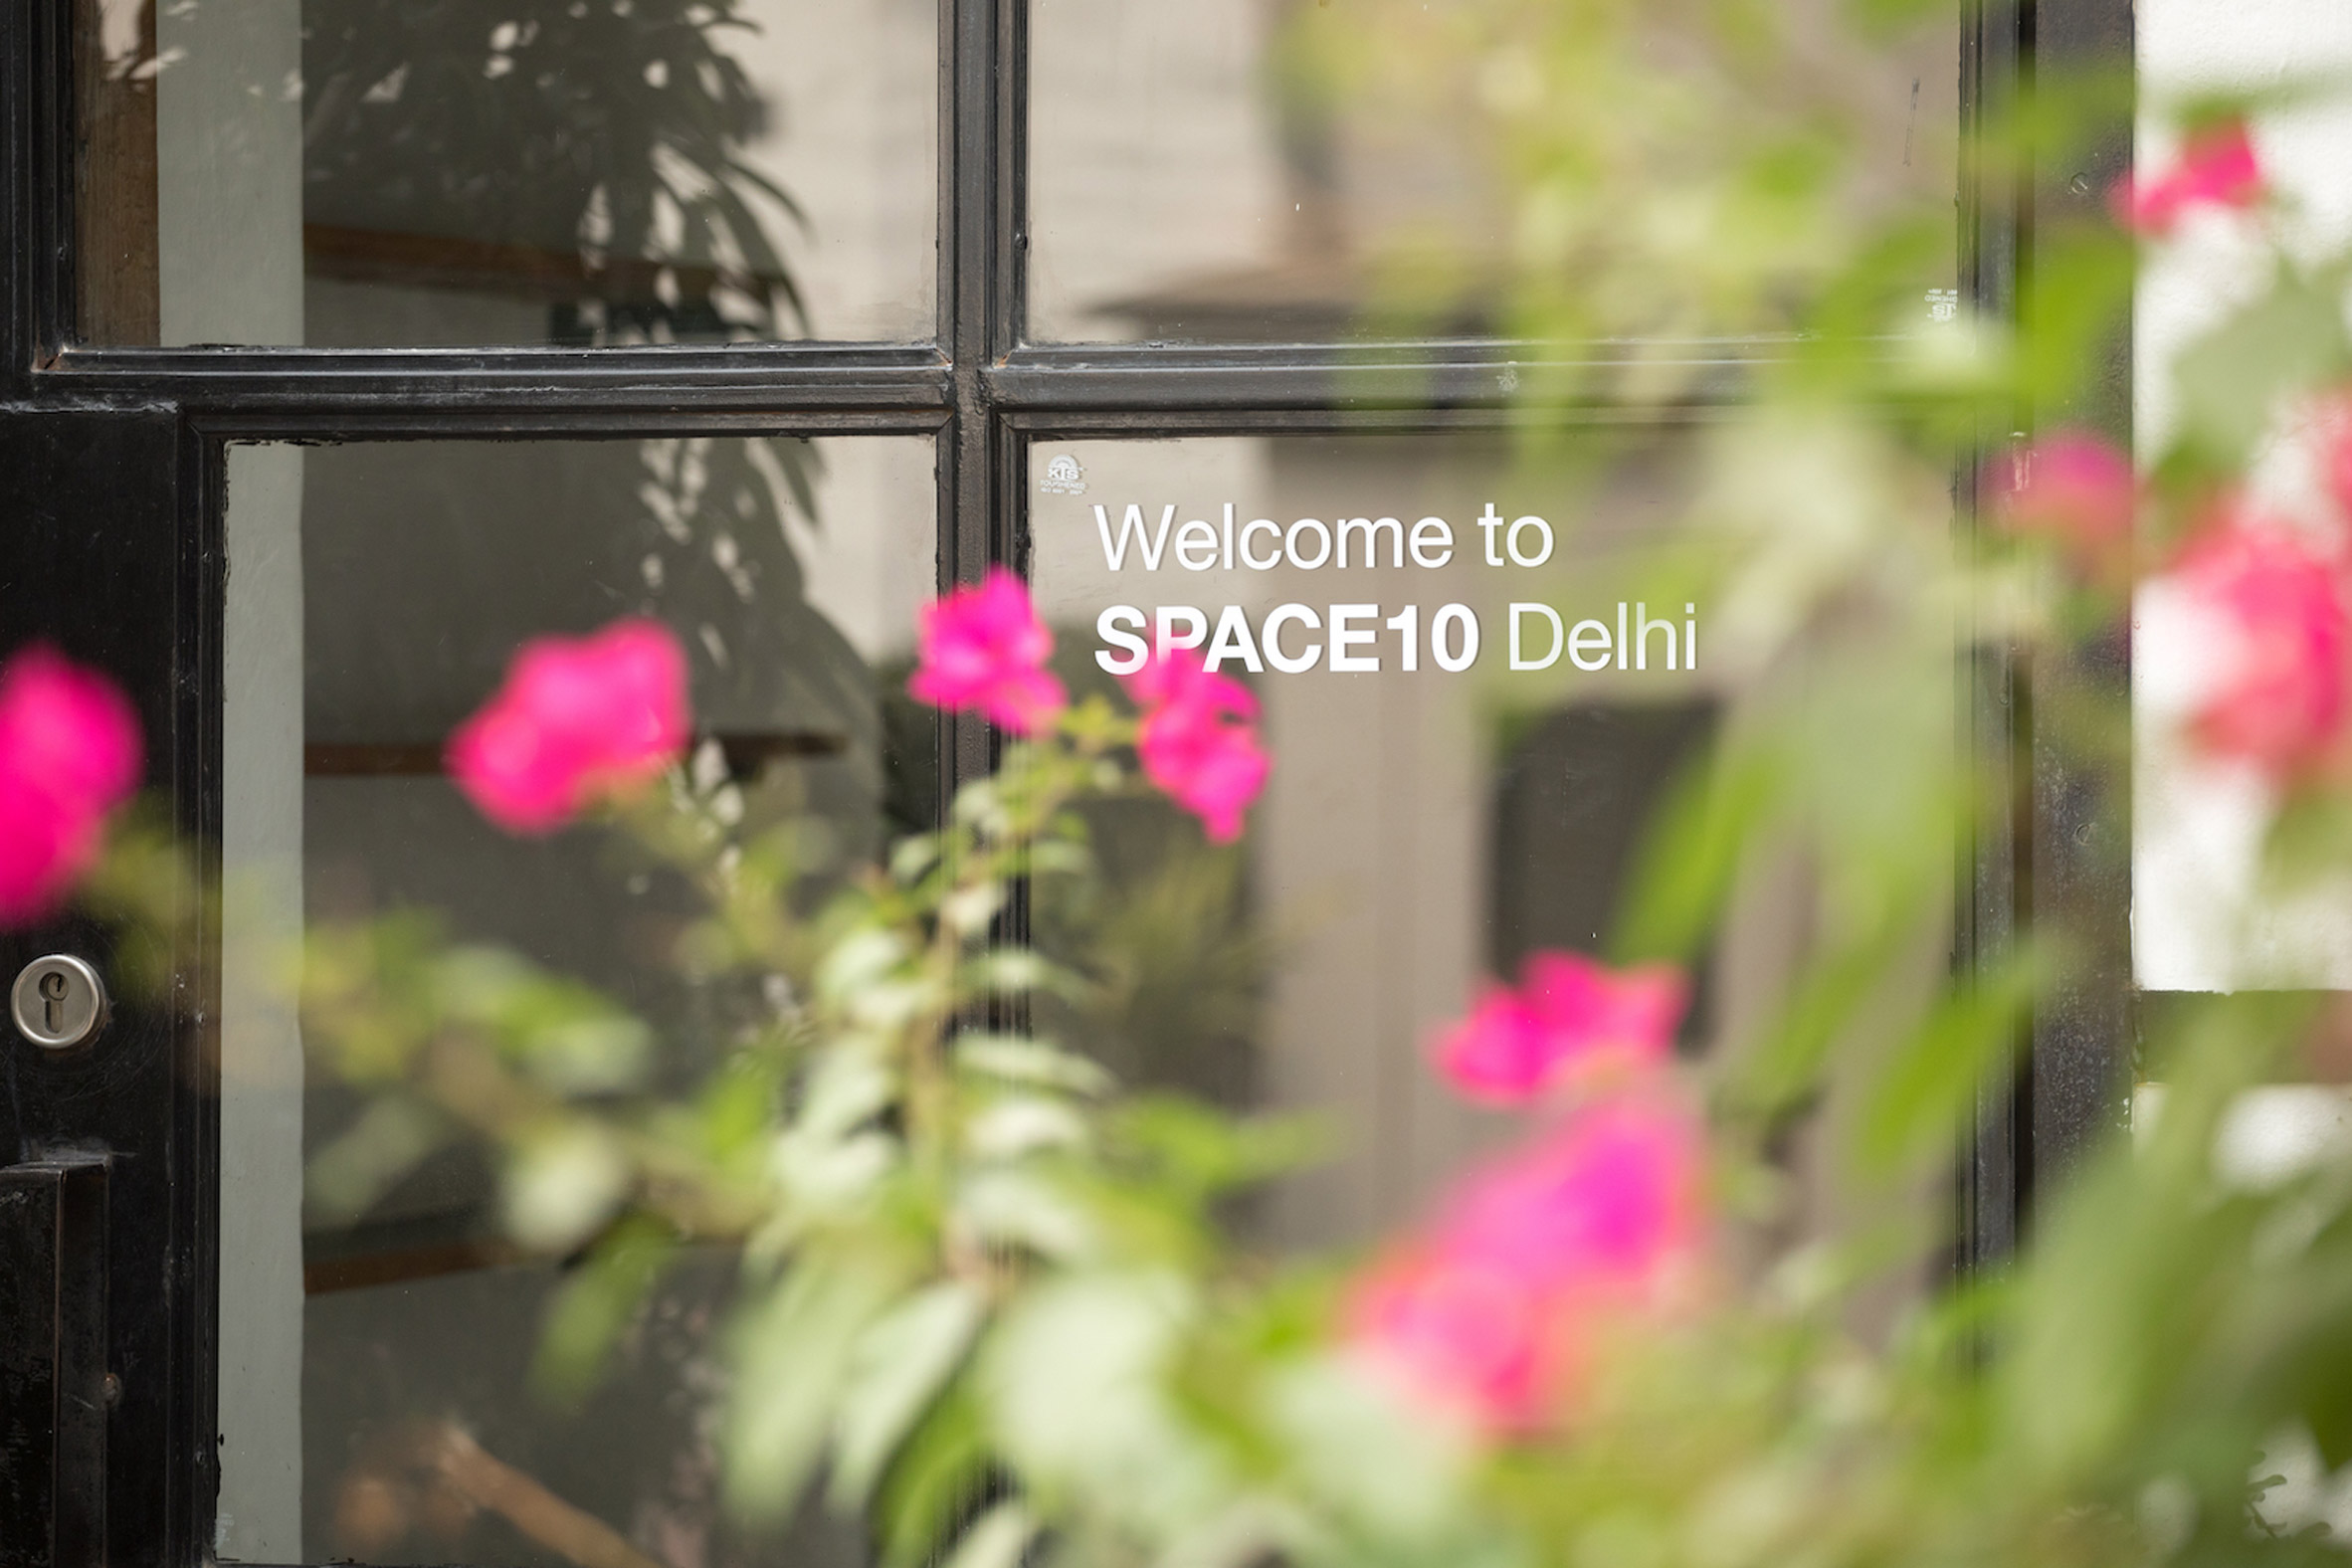 Space10 Delhi opens